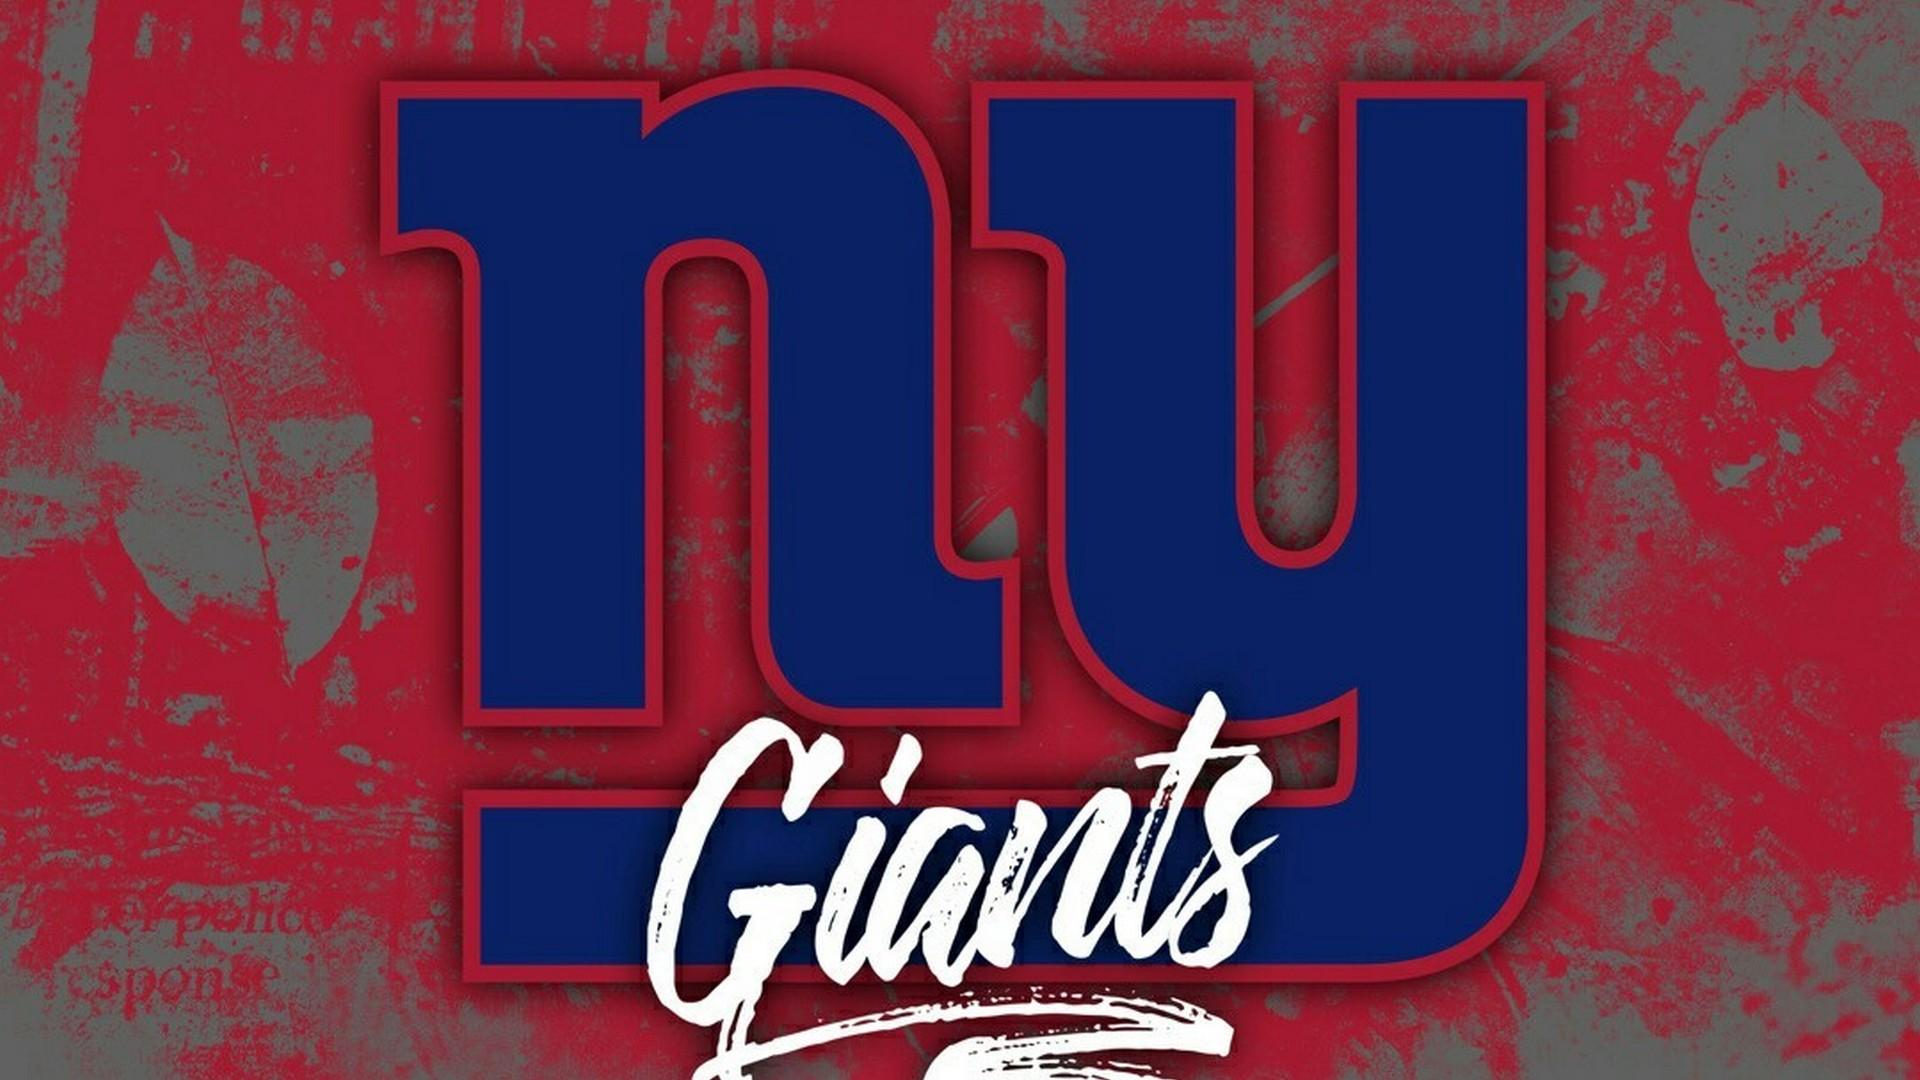 New York Giants 2019 Wallpapers Wallpaper Cave